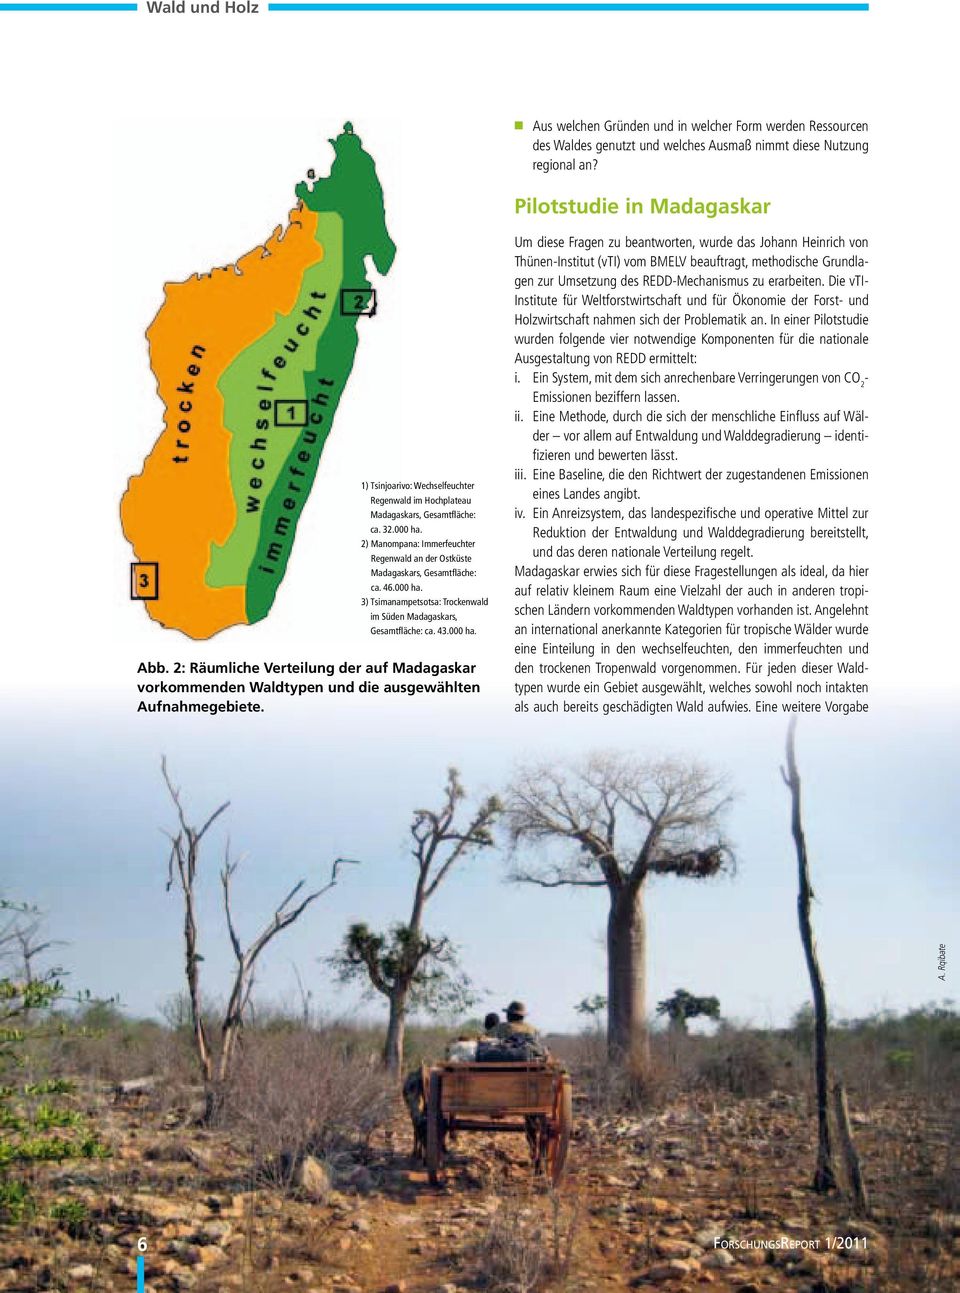 2) Manompana: Immerfeuchter Regenwald an der Ostküste Madagaskars, Gesamtfläche: ca. 46.000 ha. 3) Tsimanampetsotsa: Trockenwald im Süden Madagaskars, Gesamtfläche: ca. 43.000 ha. A. Rqibate Abb.